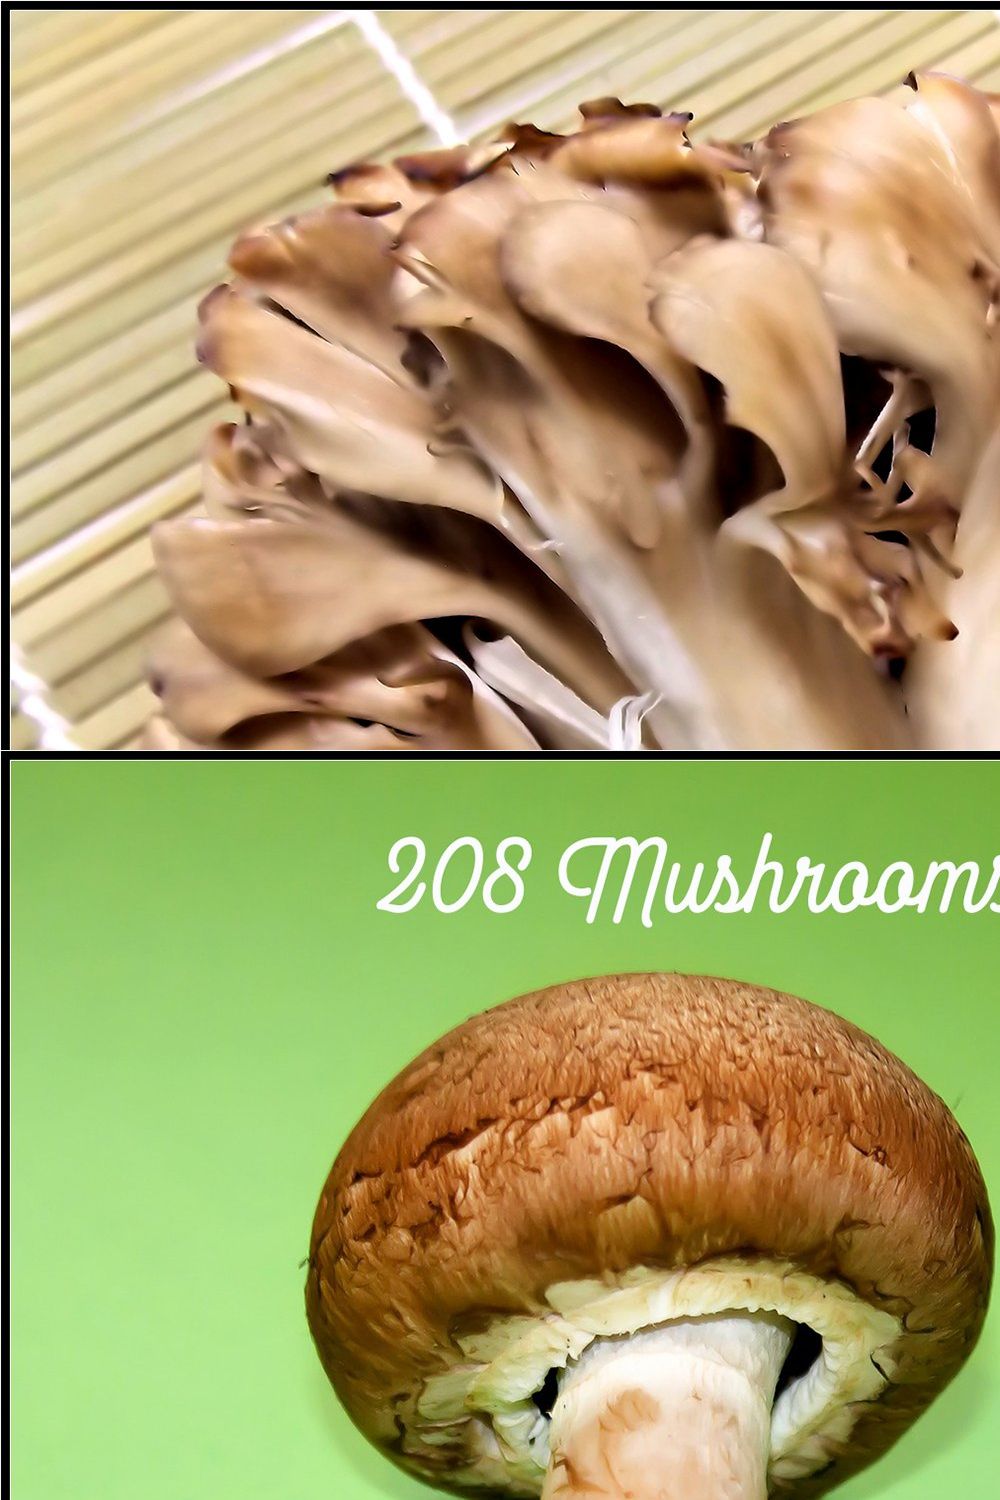 Mushrooms Gradients pinterest preview image.